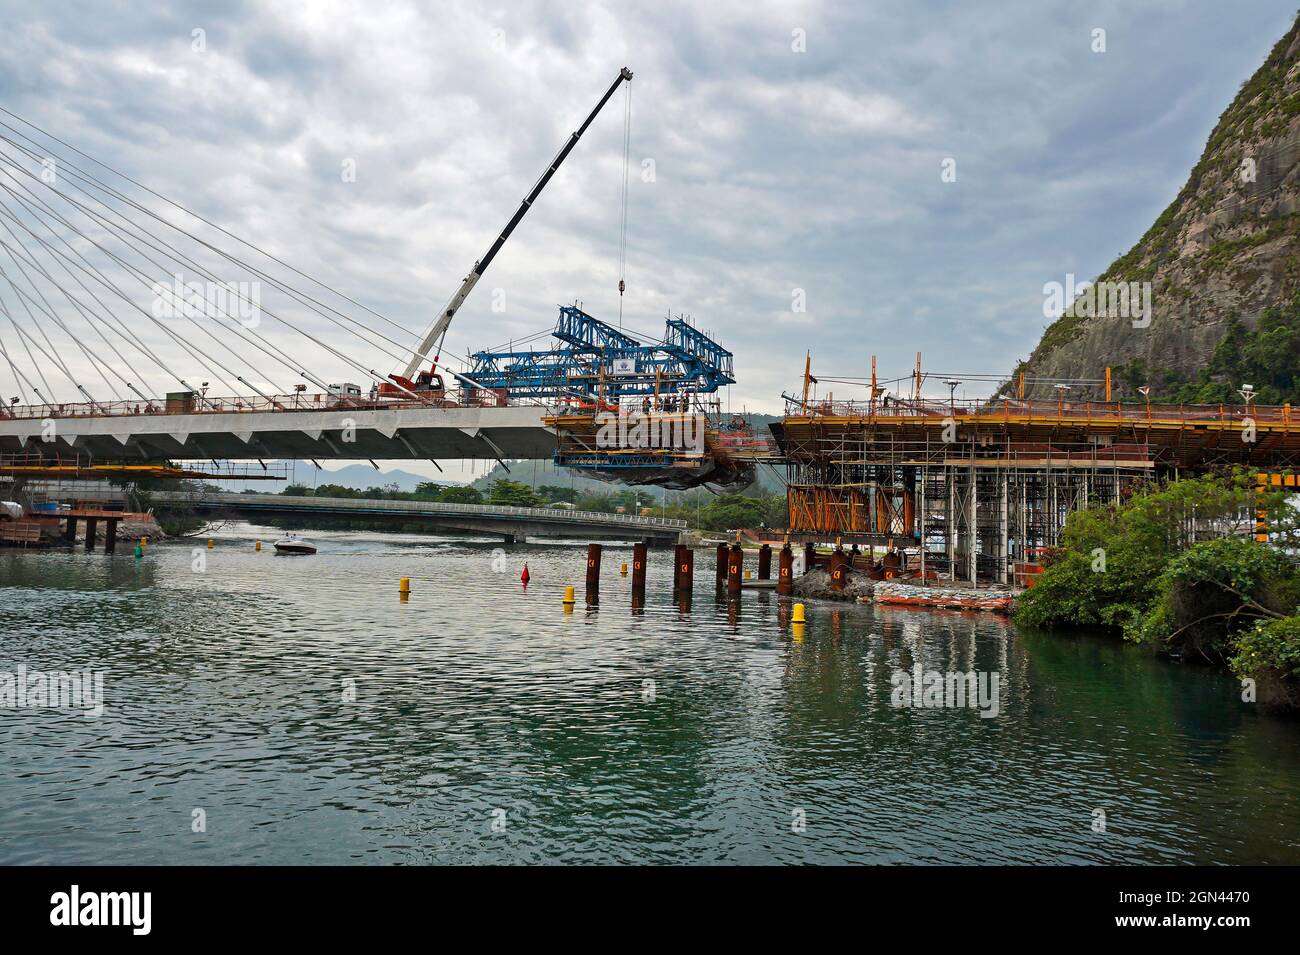 RIO DE JANEIRO, BRAZIL - NOVEMBER 14, 2015: Cable-stayed bridge construction to expand Rio's subway line to Barra da Tijuca neighborhood Stock Photo